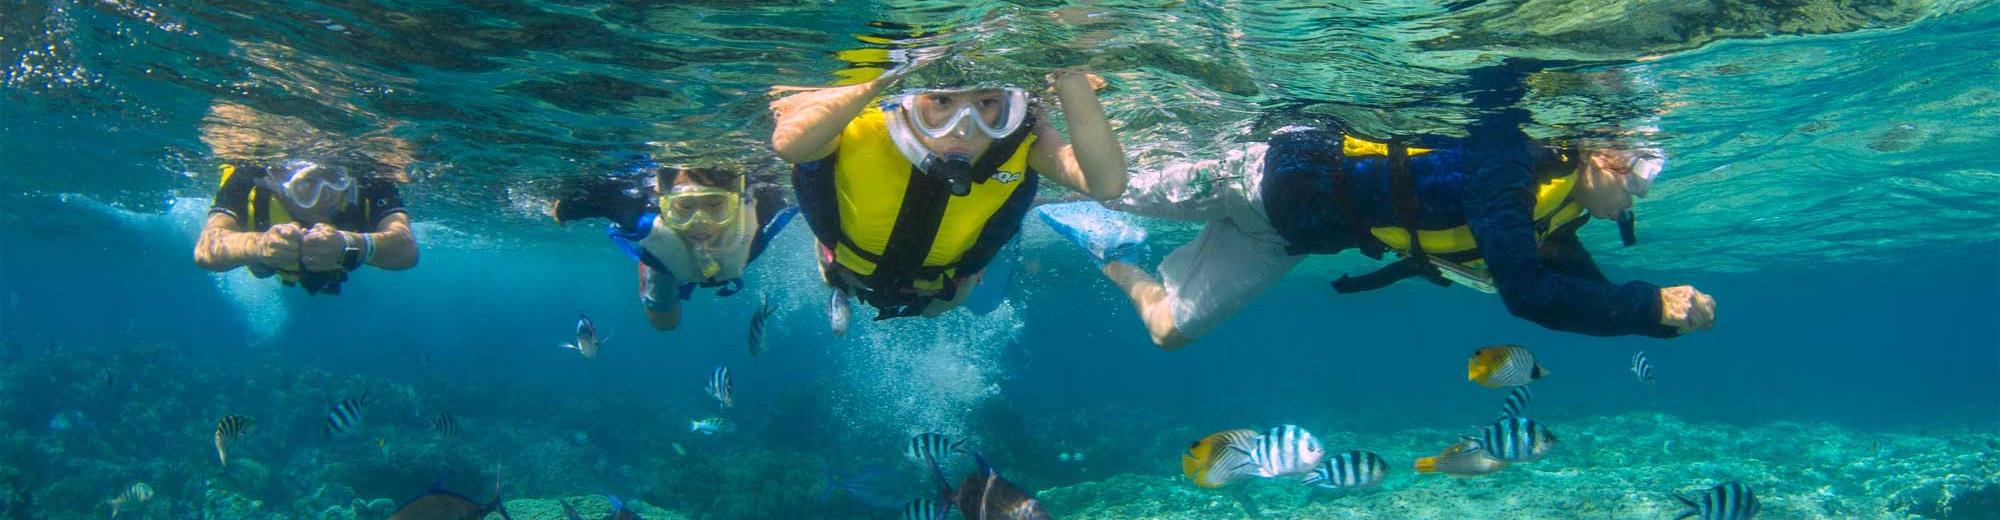 Piti Bay Marine Preserve Eco Snorkeling Tour